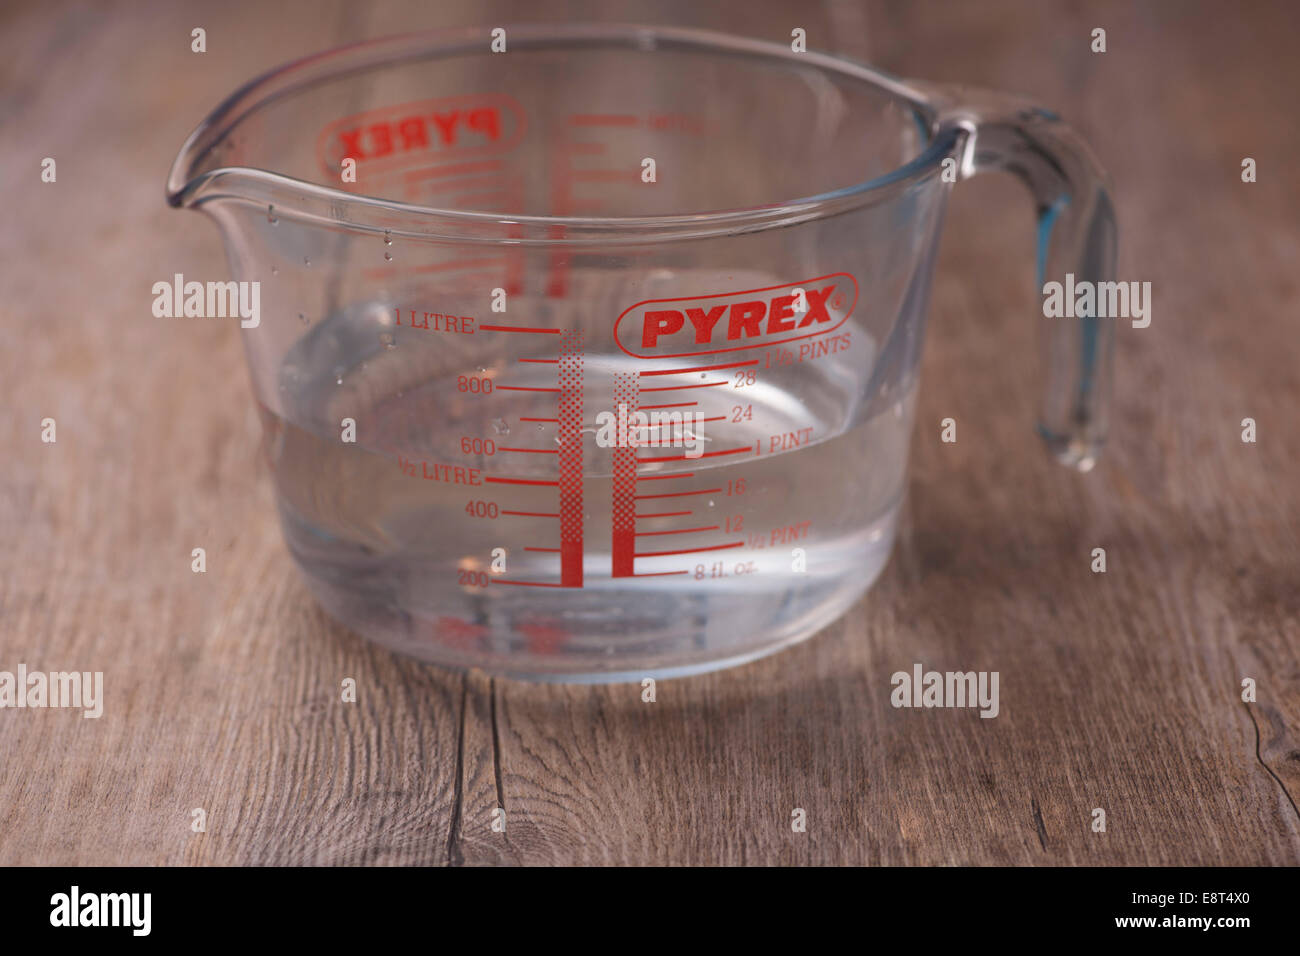 Pyrex glass one litre measuring jug Stock Photo